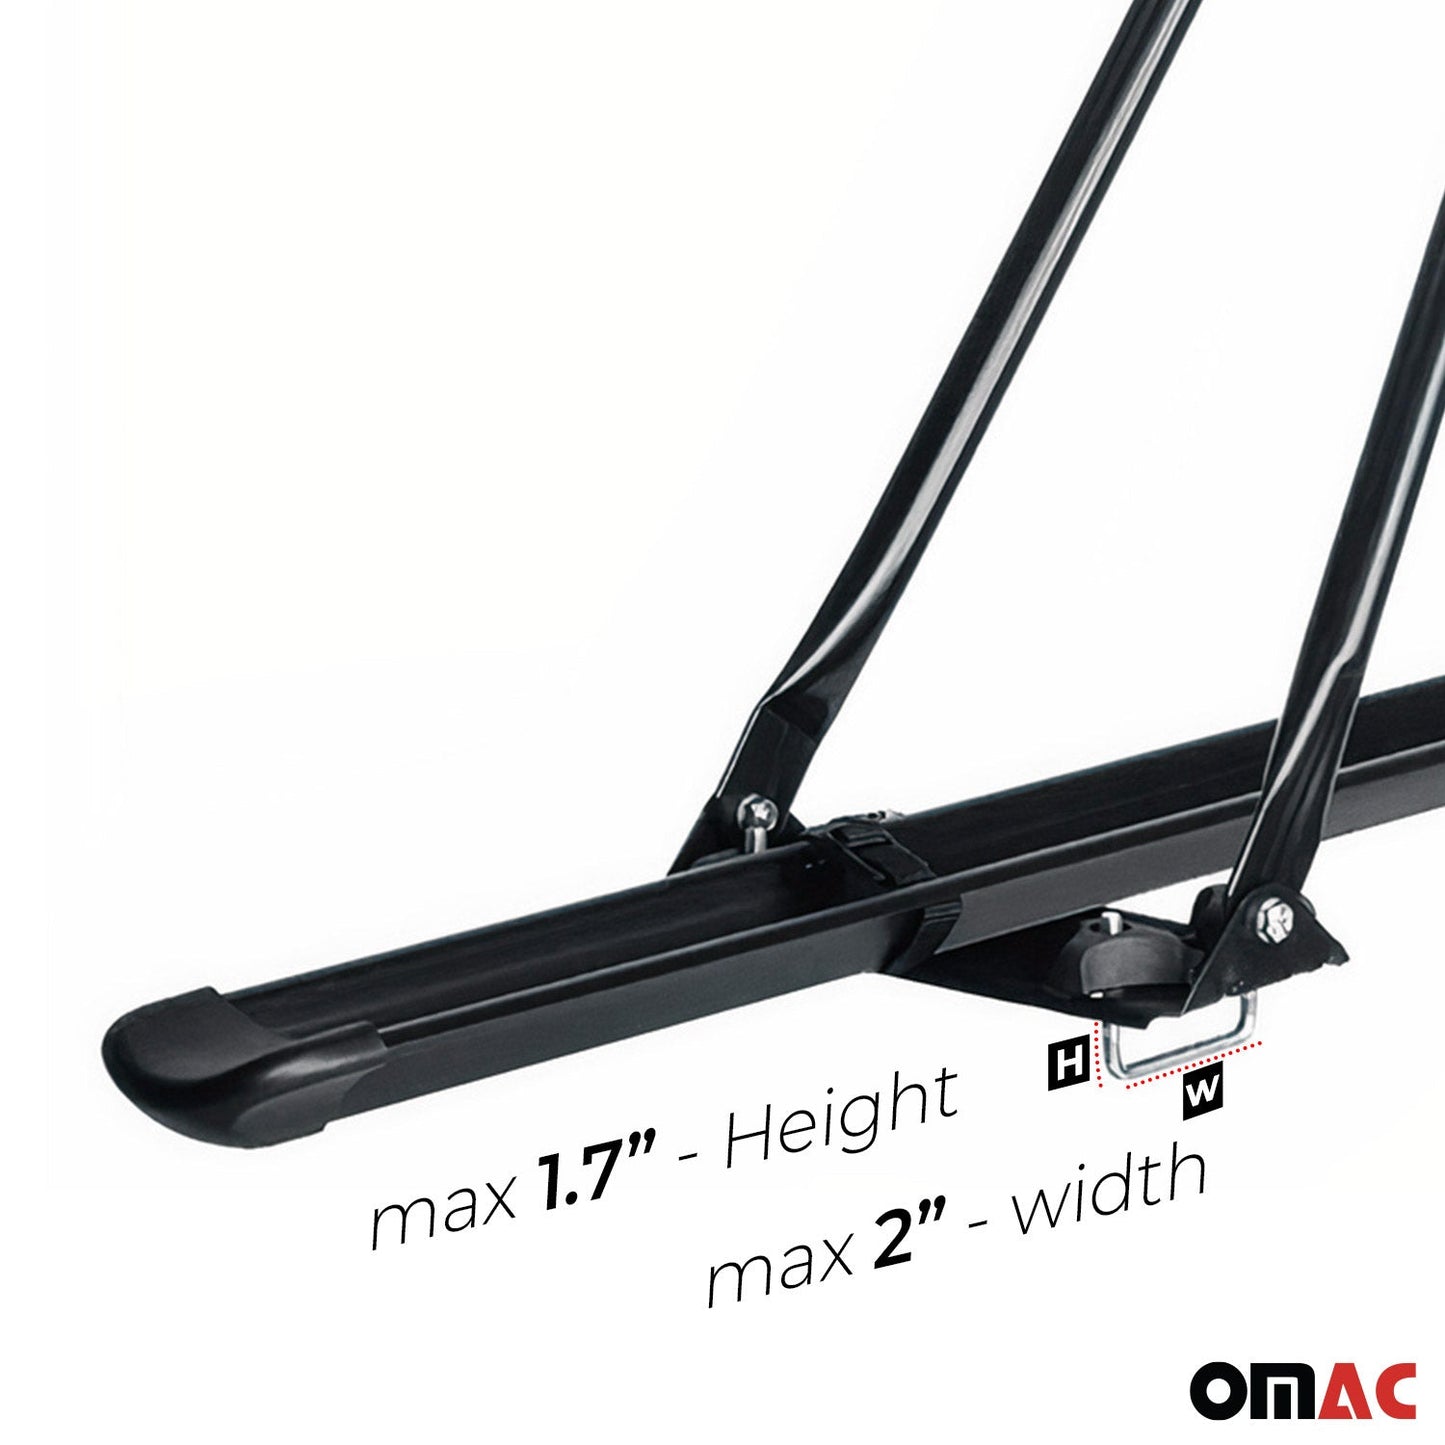 OMAC Bike Rack Carrier Roof Racks Set fits VW Jetta SportWagen 2011-2014 Black 3x U020662